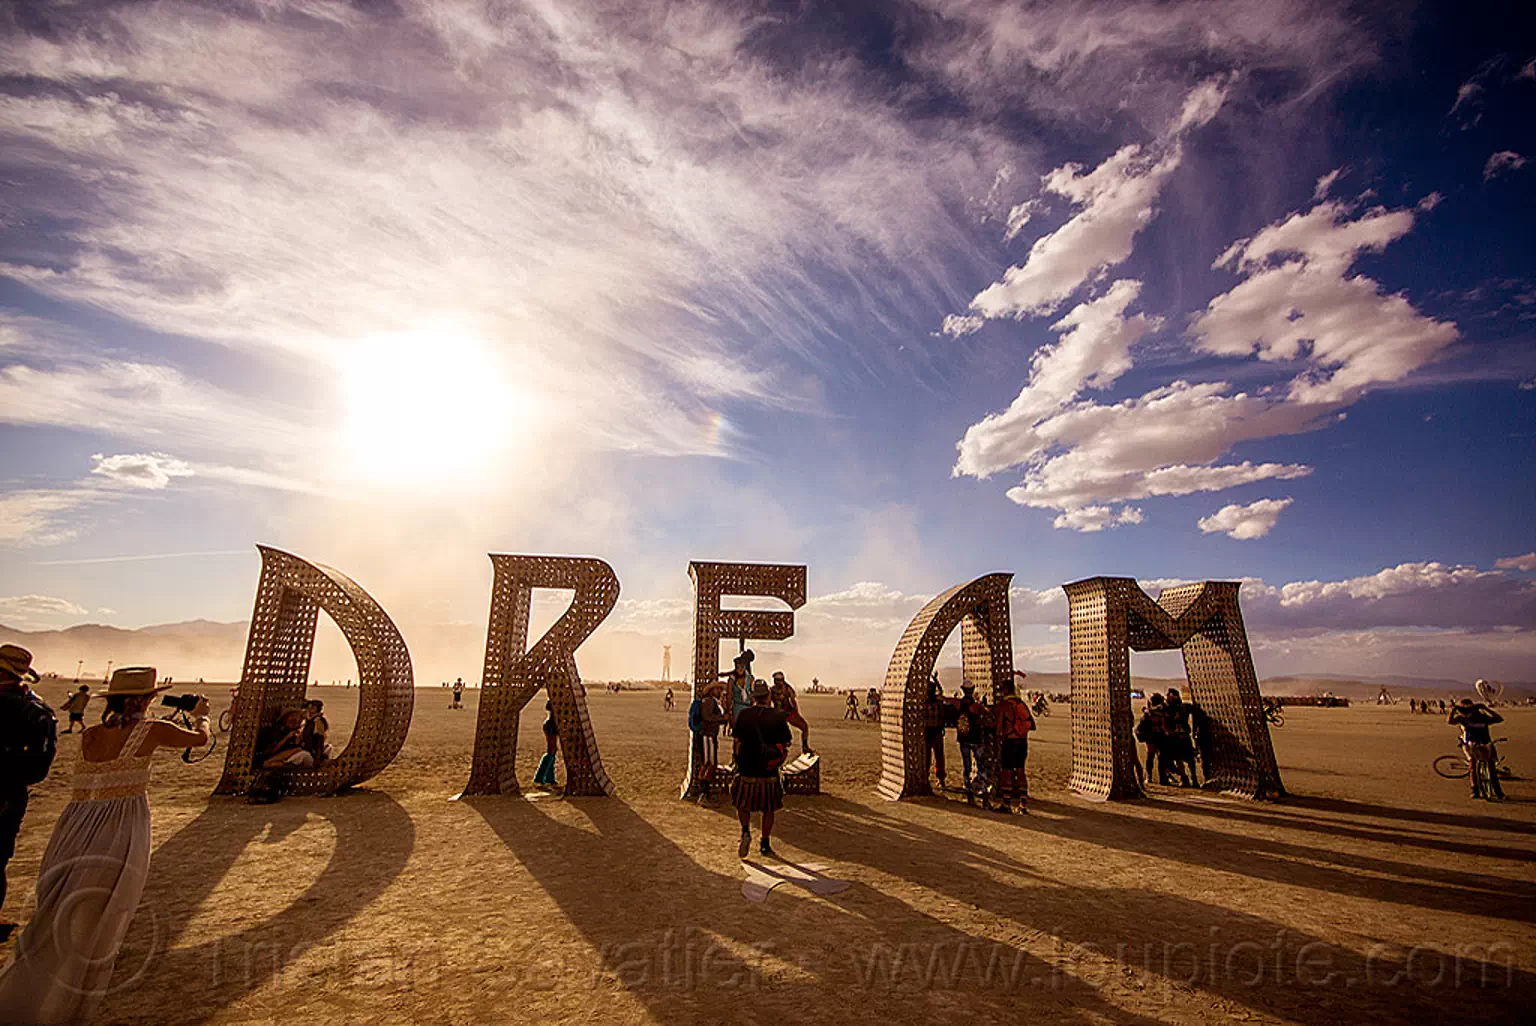 DREAM - giant letters - big words - burning man 2015, art installation, big words, burning man, dream, metal sculpture, steel